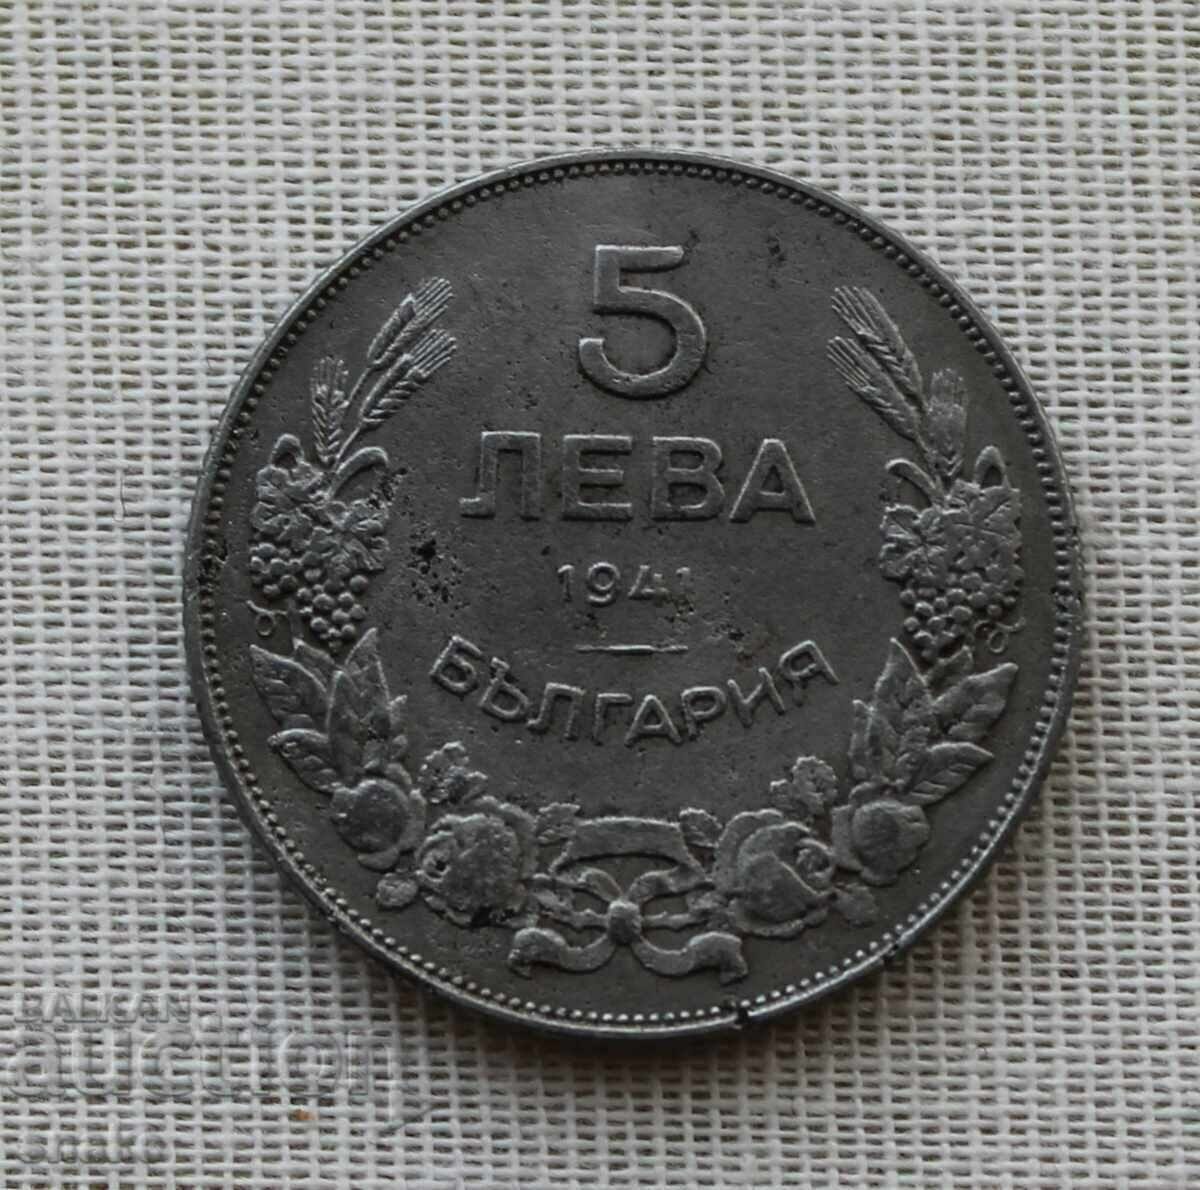 Bulgaria 5 BGN 1941 Moneda de top.